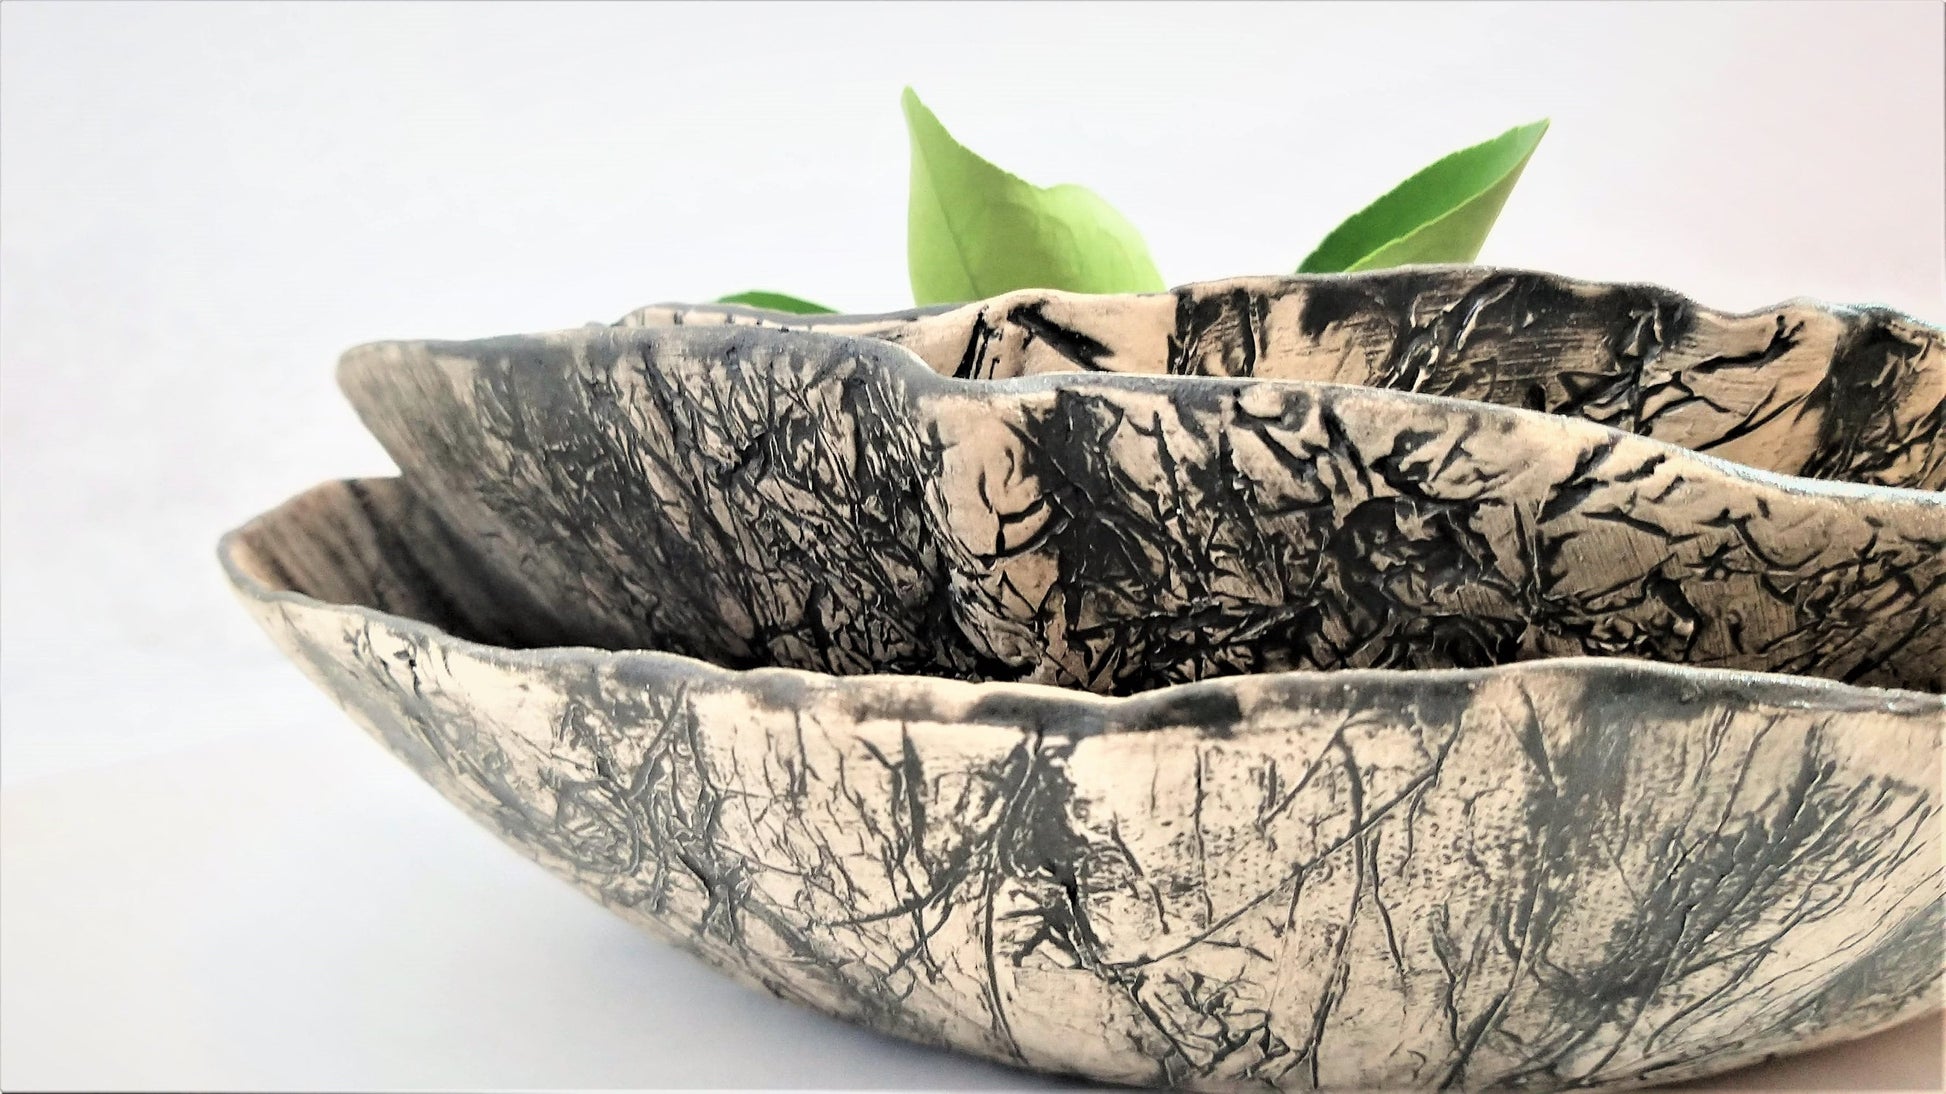 Extra Large Ceramic Bowl White Organic Pottery Bowl Modern Rustic